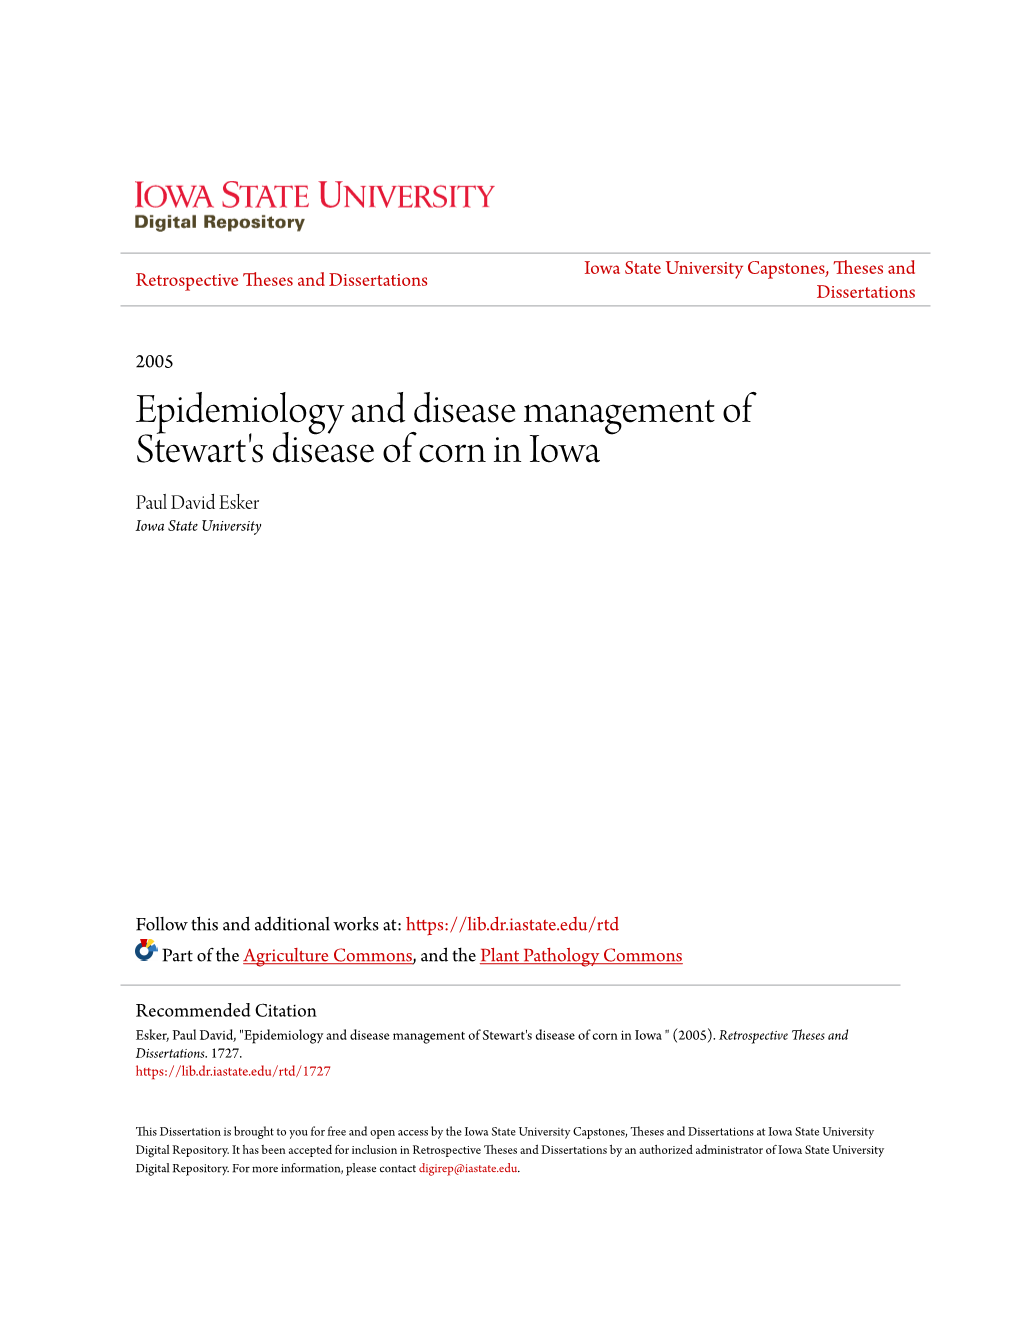 Epidemiology and Disease Management of Stewart's Disease of Corn in Iowa Paul David Esker Iowa State University